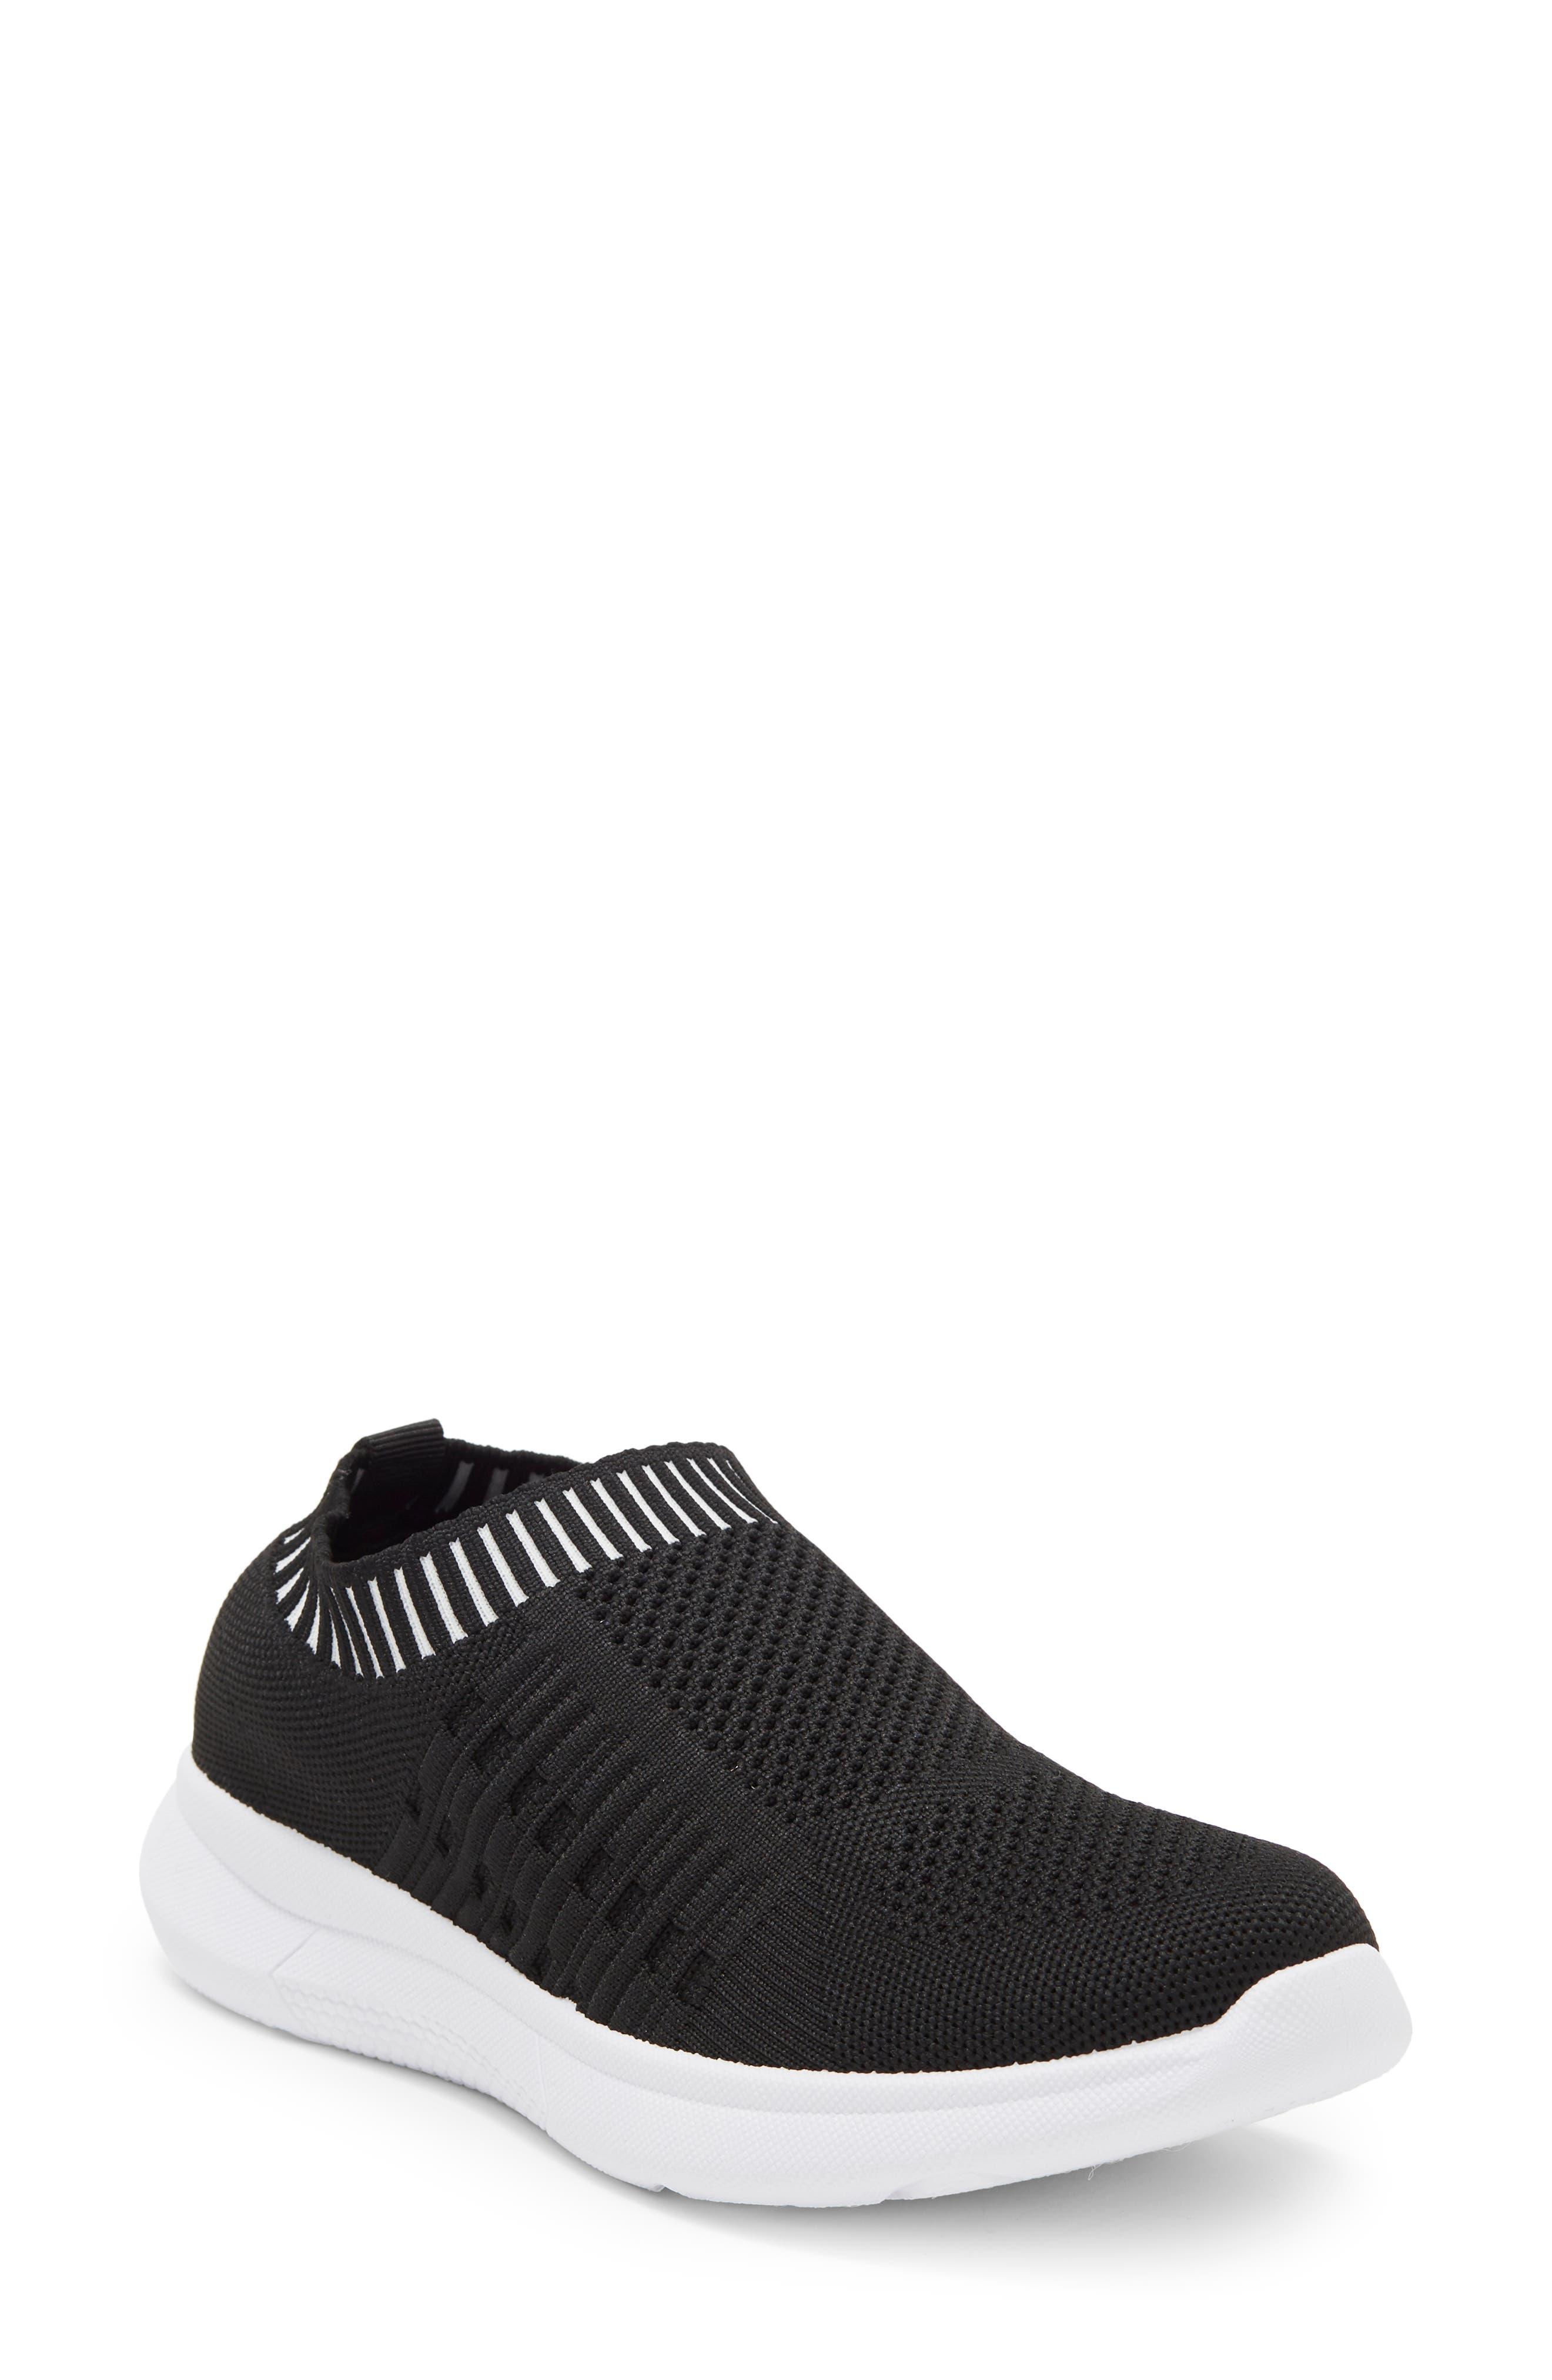 Danskin Textured Knit Slip-on Sneaker in Black | Lyst